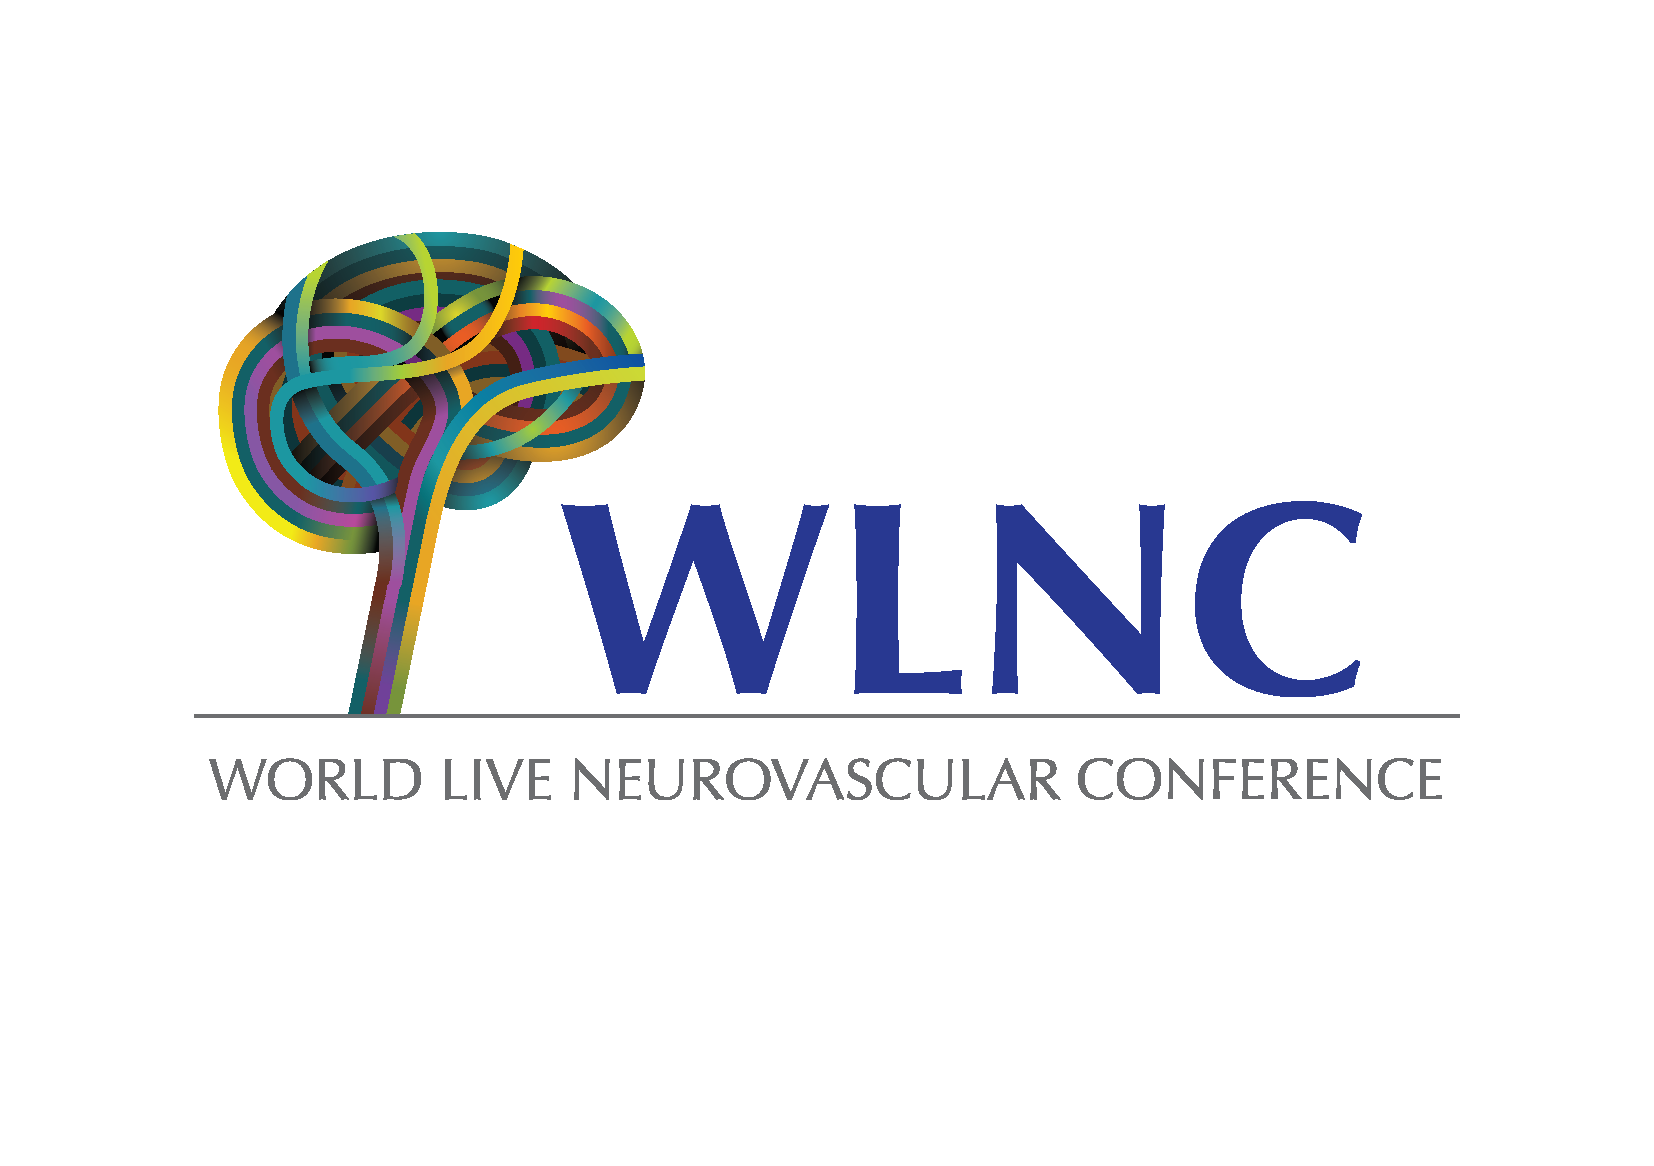 World Live Neurovascular Conference (WLNC)